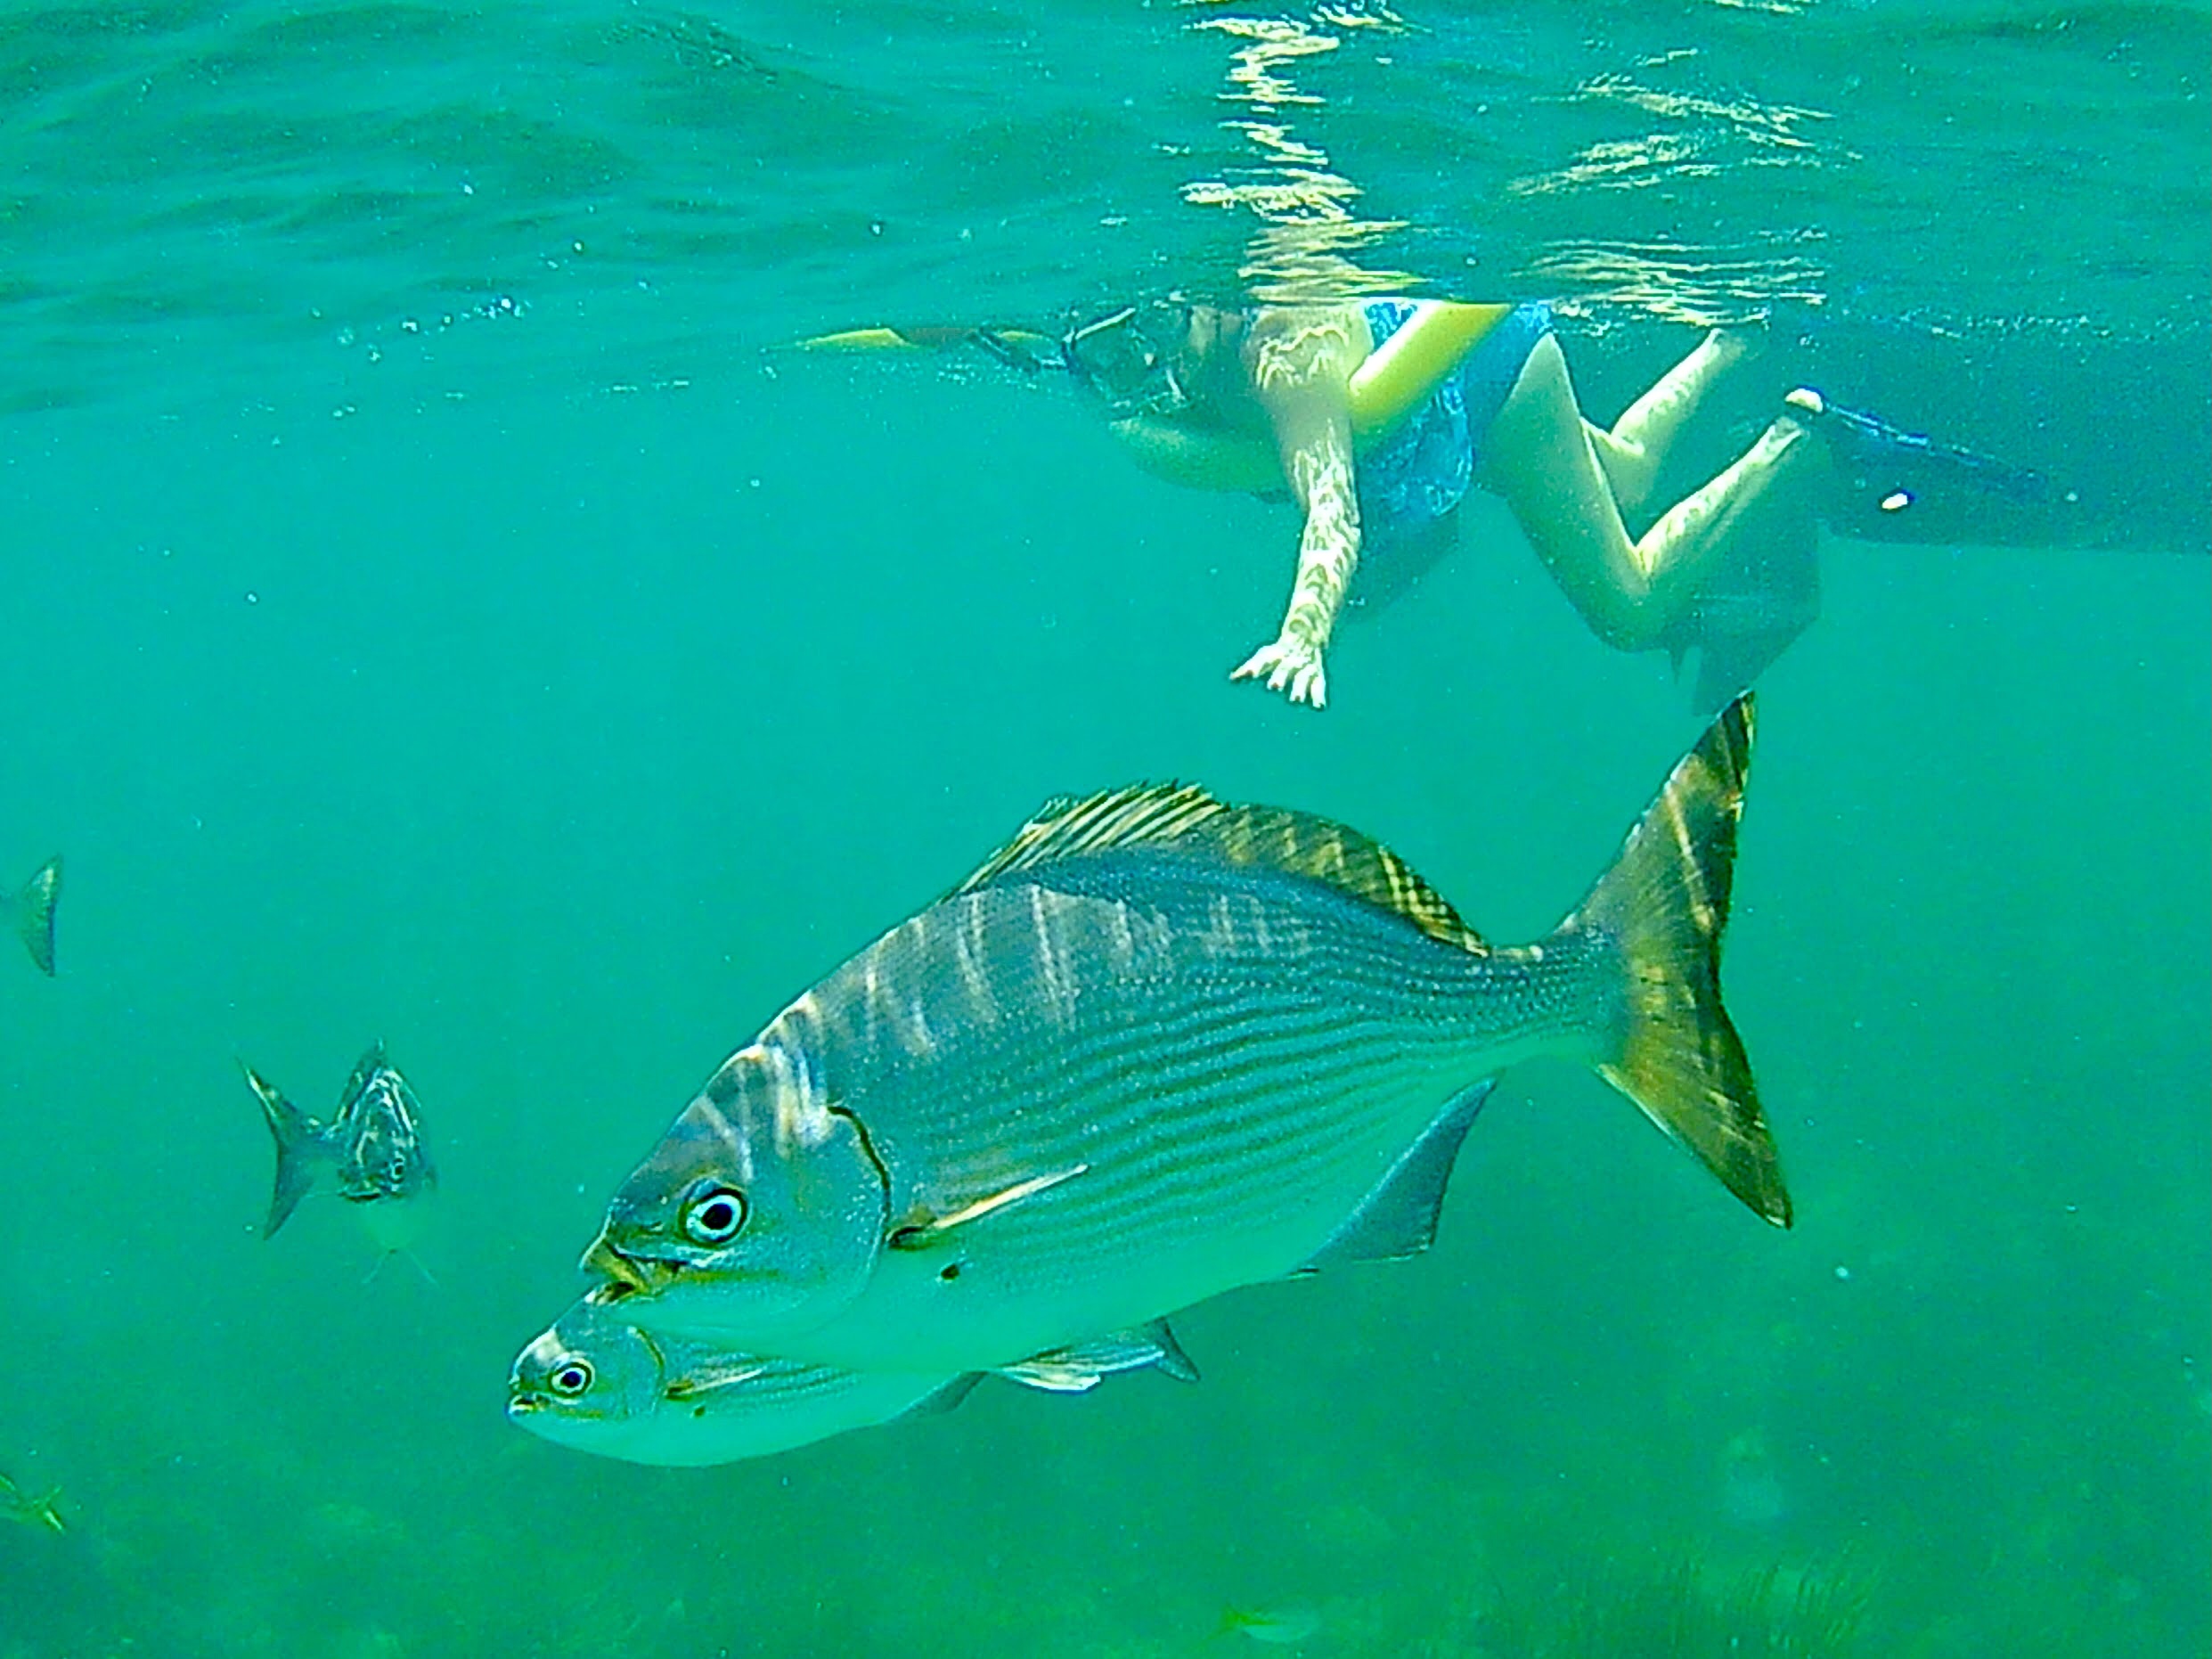 Person snorkeling, bermuda chub fishes swimming around